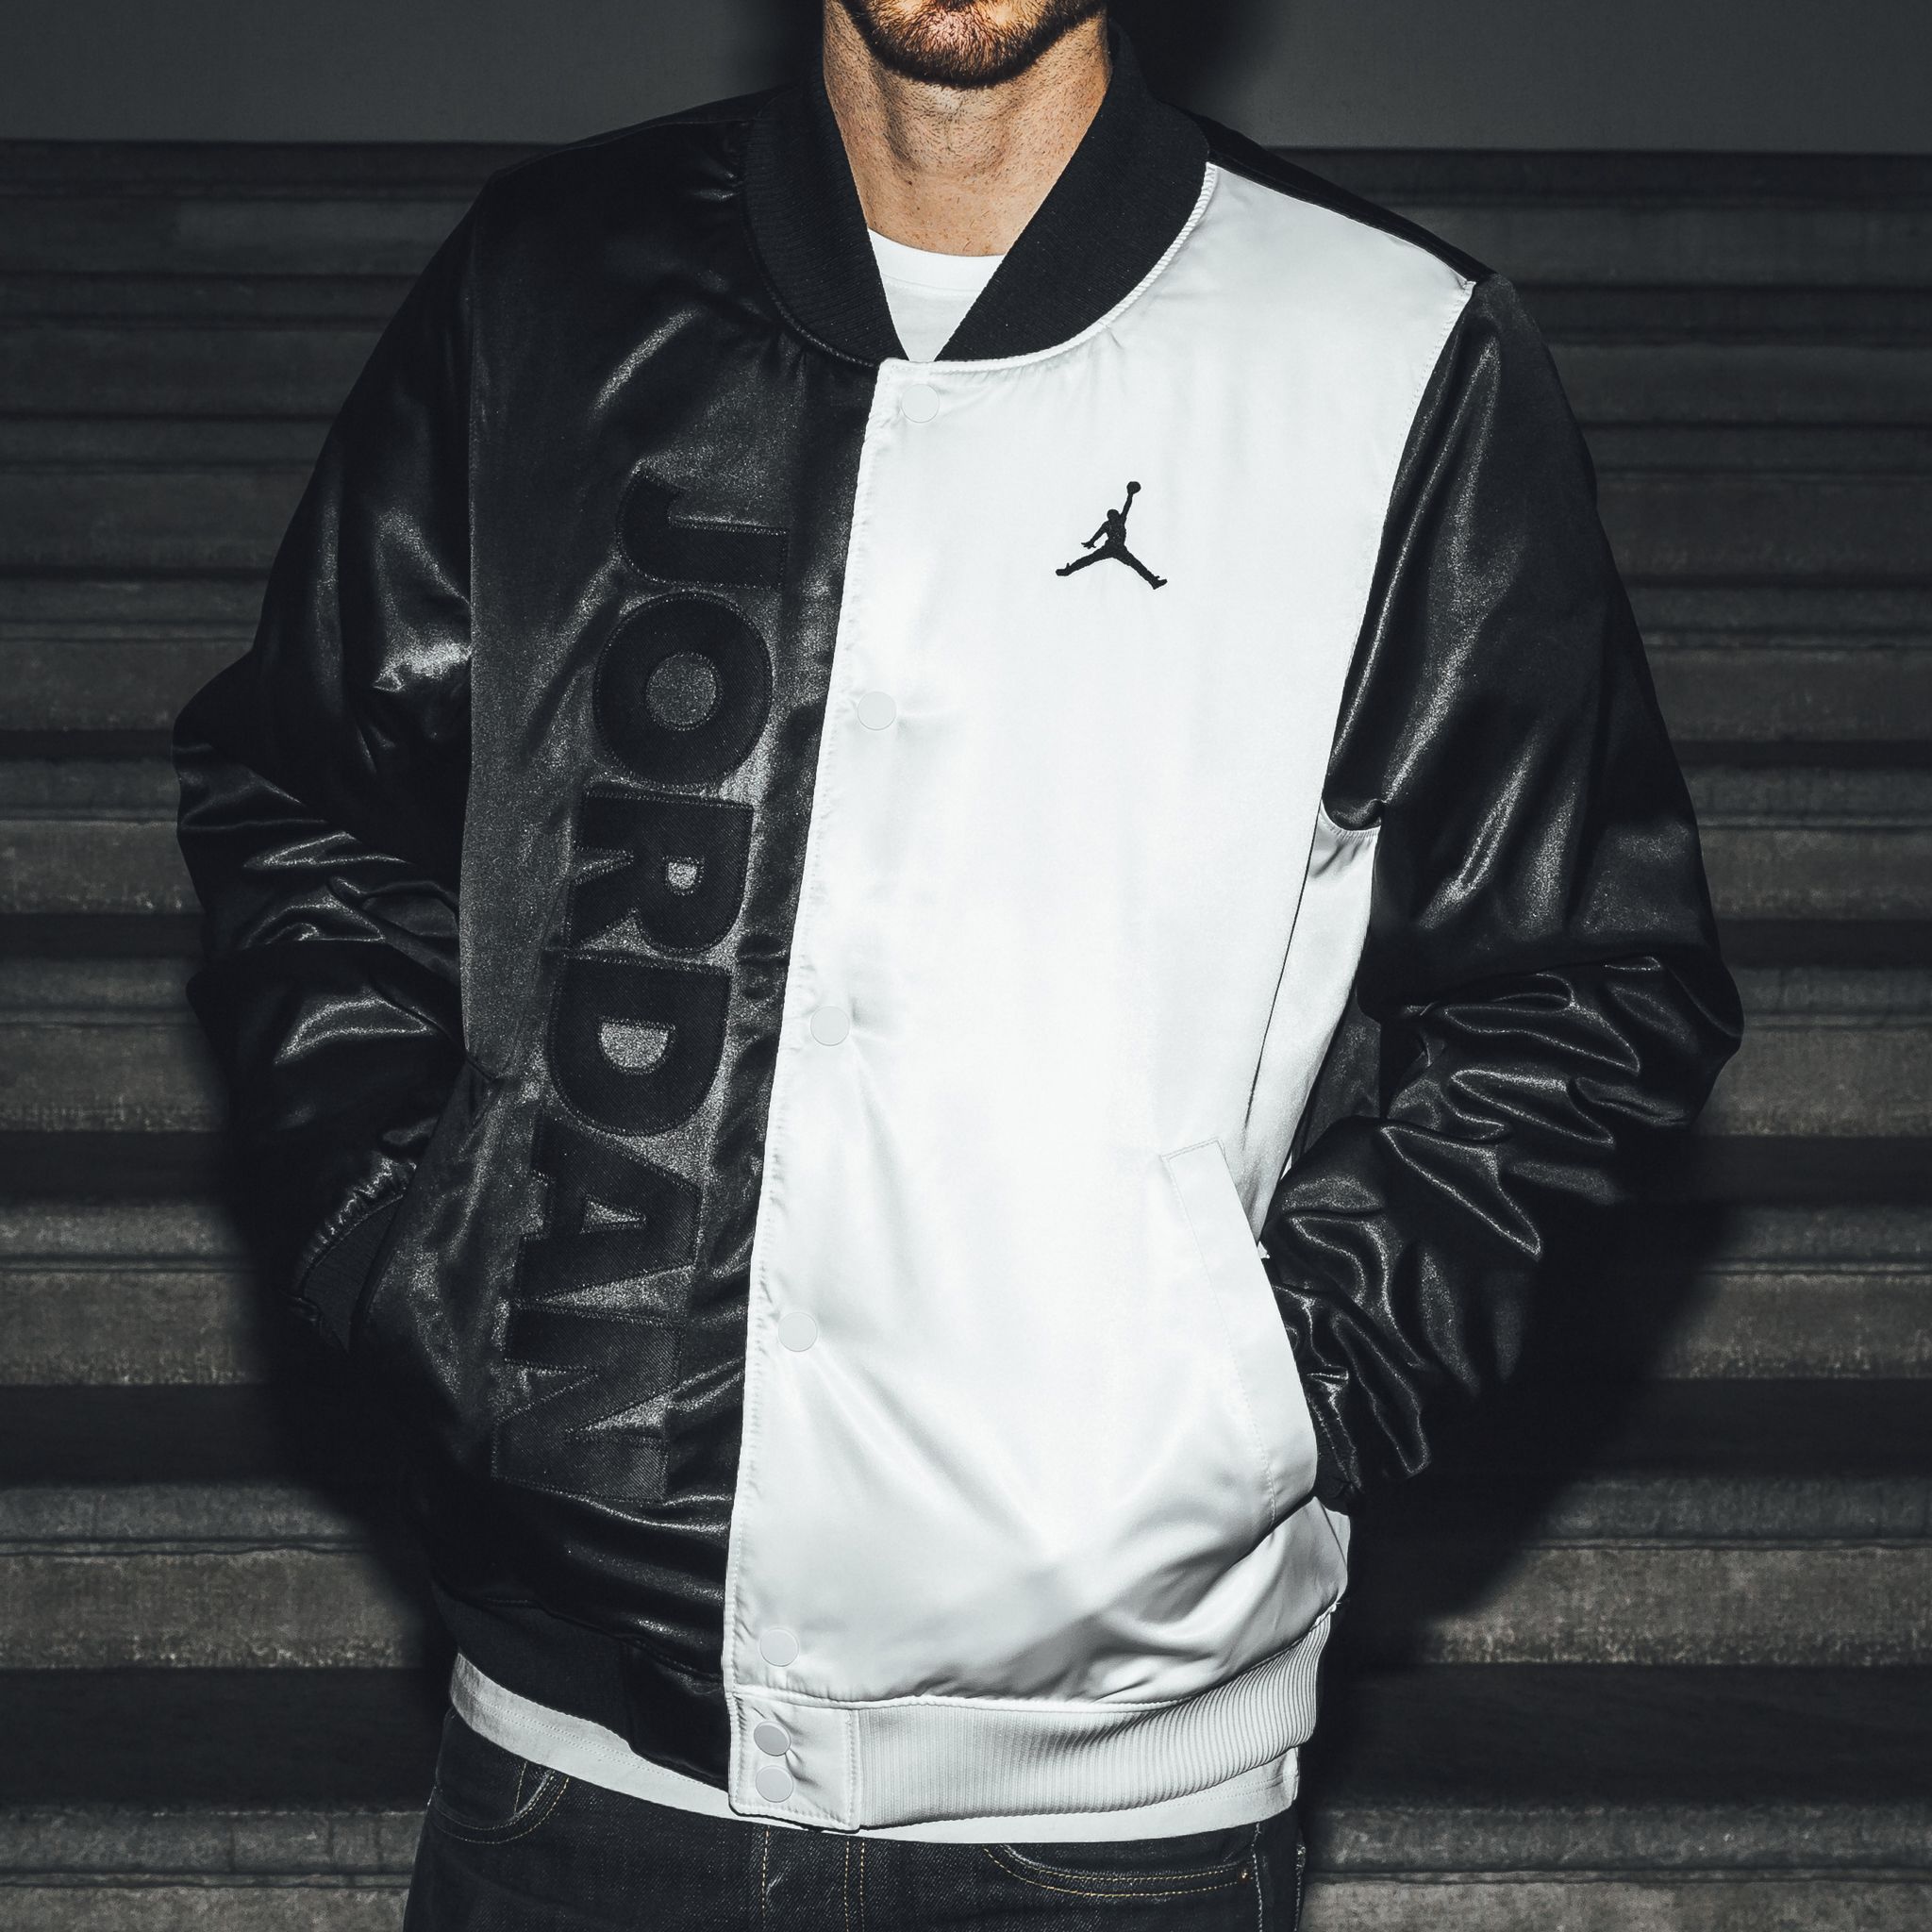 Titolo on Twitter: "Jordan Sportswear Legacy AJ 11 Jacket "White/Black/Black" take a look here ➡️ https://t.co/nf8G6Z8ogI #jordan #jumpman #airjordan11 #apparel #AJ11 #legacy #concord https://t.co/T3uuB67FLl" / Twitter